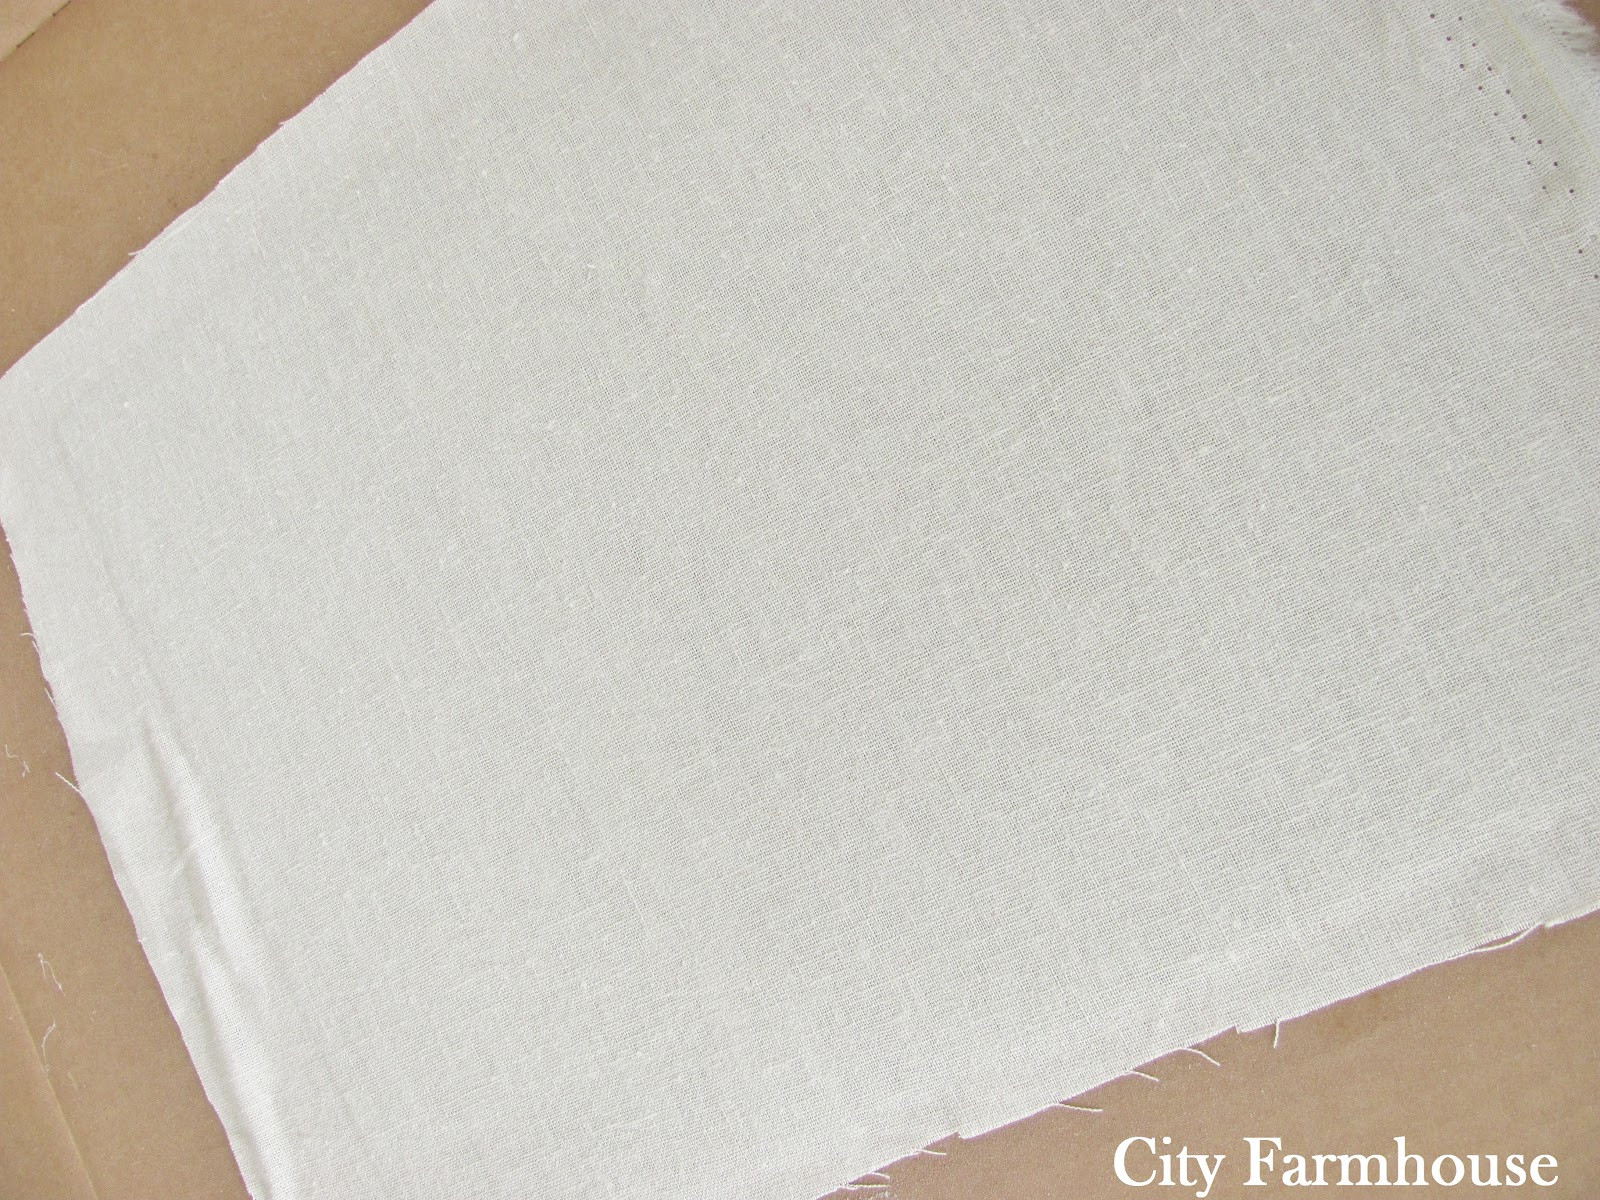 City Farmhouse: Printing on Linen Tutorial & Free Fall Printables